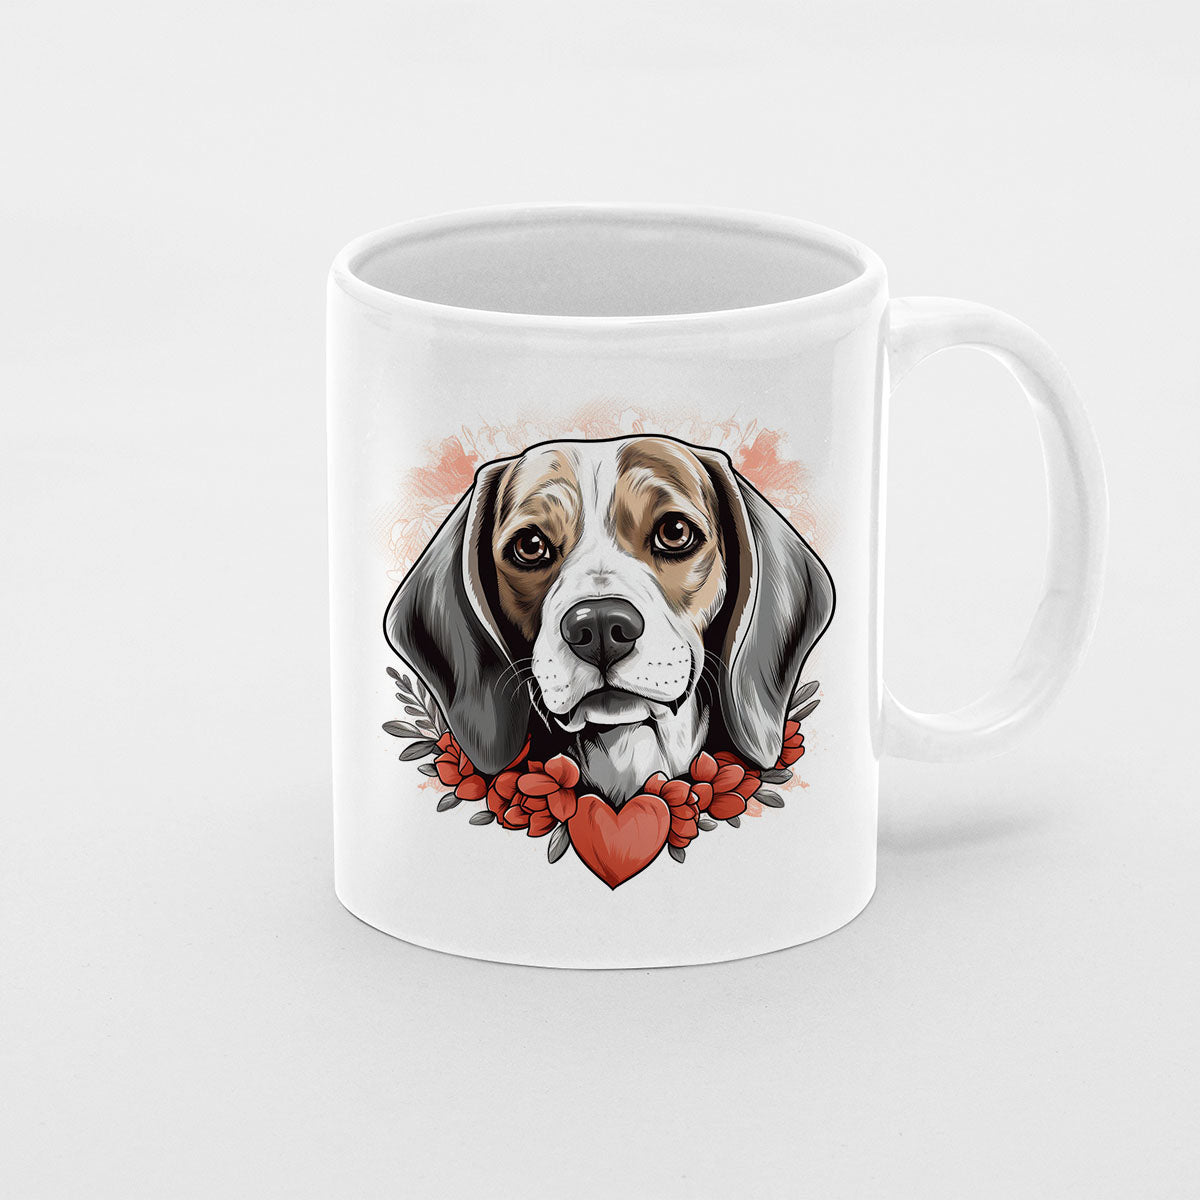 Custom Valentine's Day Dog Mug, Personalized Valentine's Day Gift for Dog Lover, Cute Beagle Love Ceramic Mug, Dog Coffee Mugs, Personalized Pet Mugs, Cute Valentine Puppy Heart Ceramic Mug, Valentines Gift